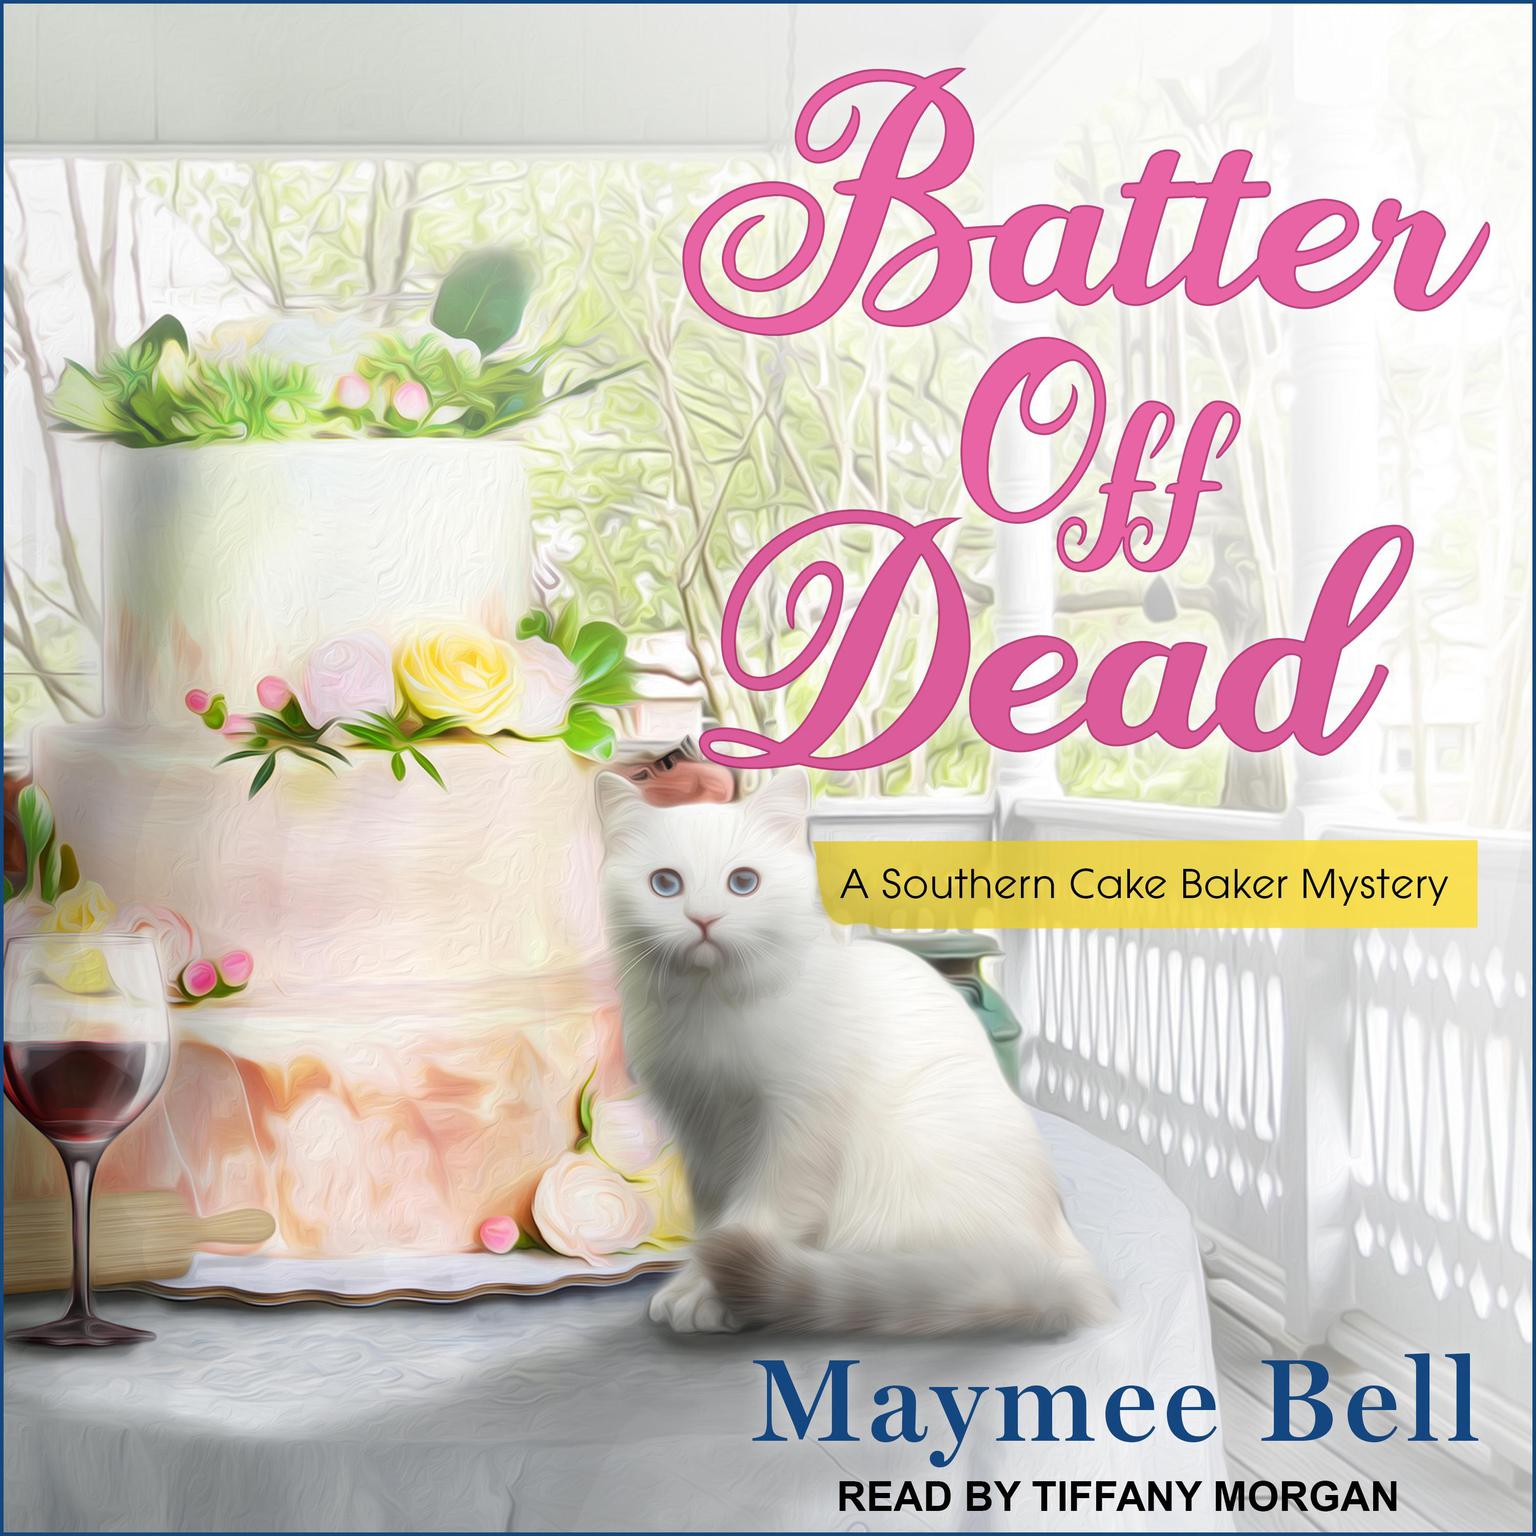 Batter Off Dead Audiobook, by Maymee Bell